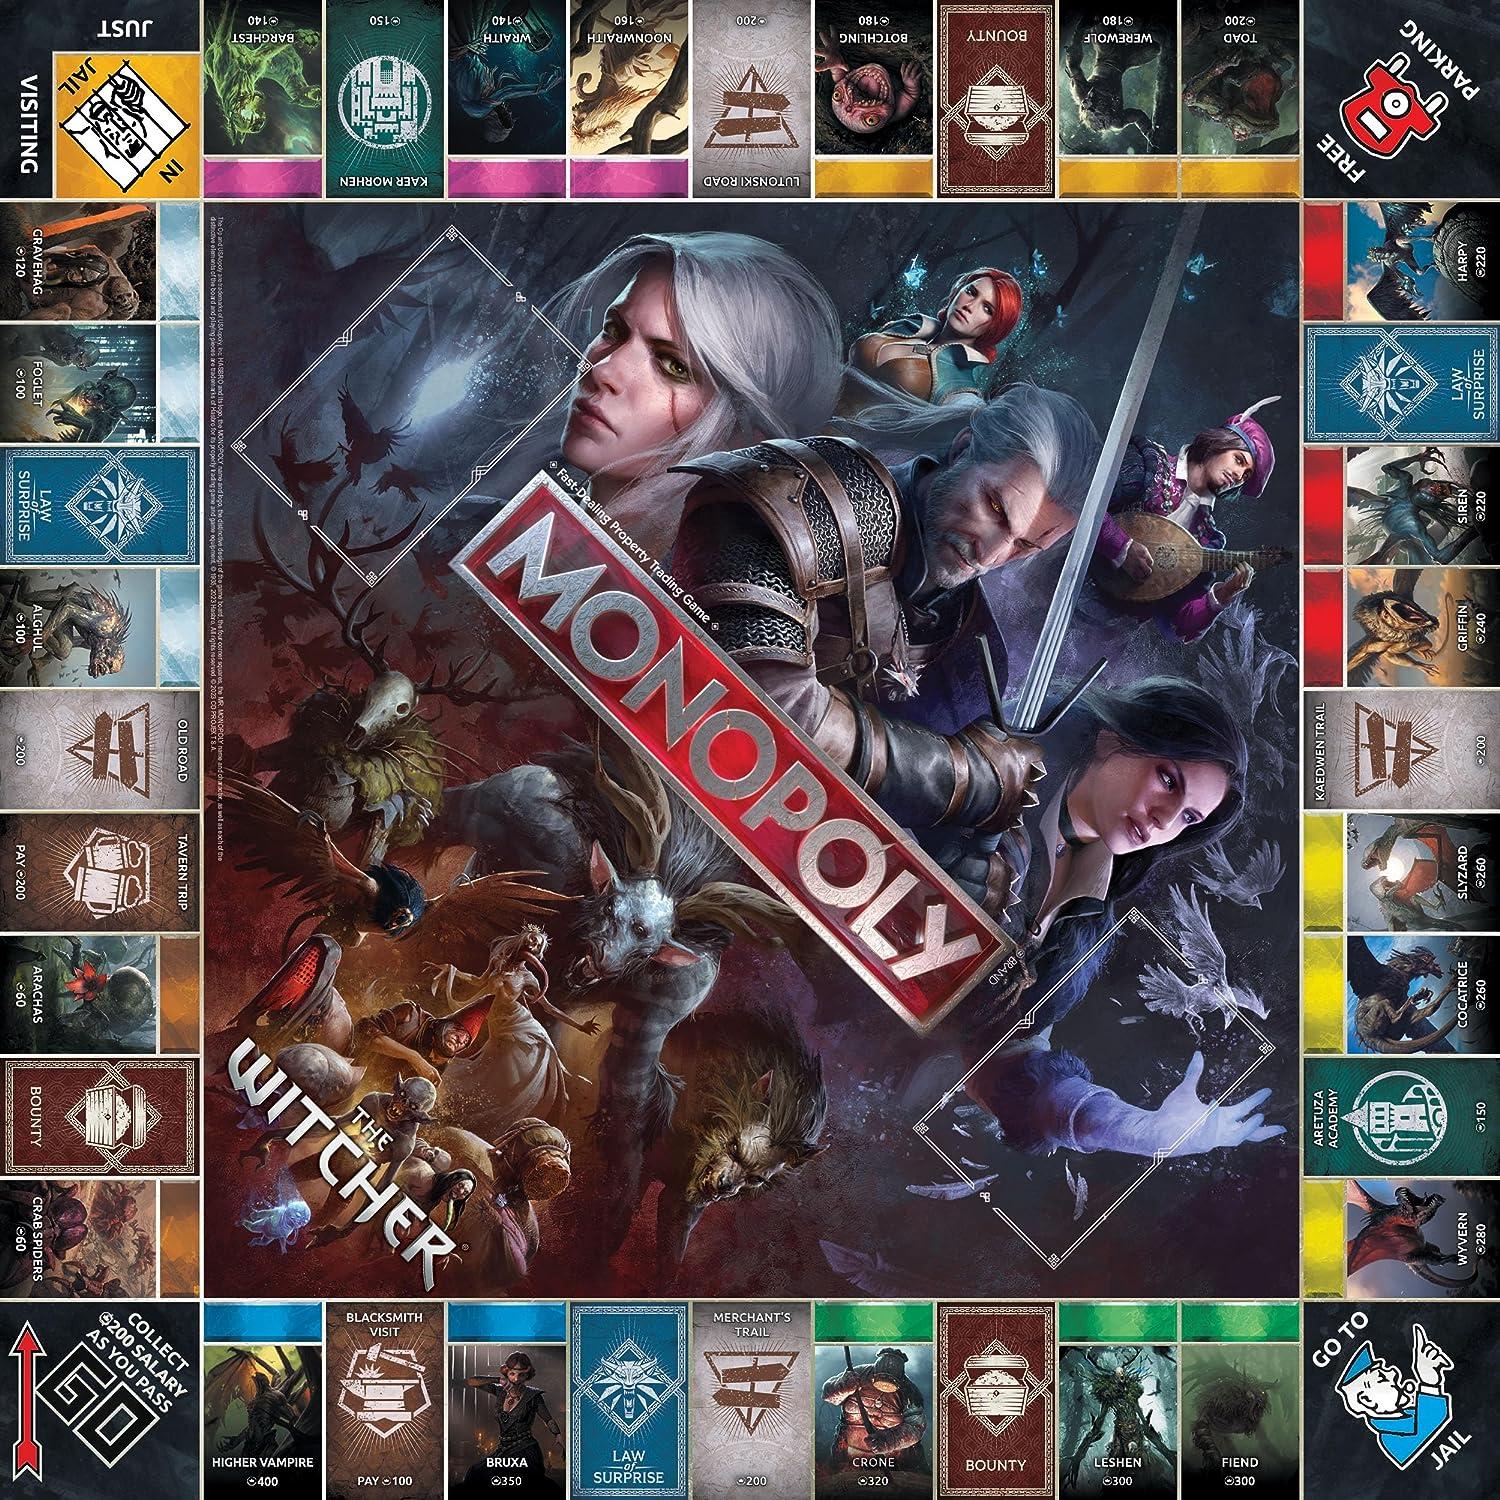 MONOPOLY®: My Hero Academia – The Op Games